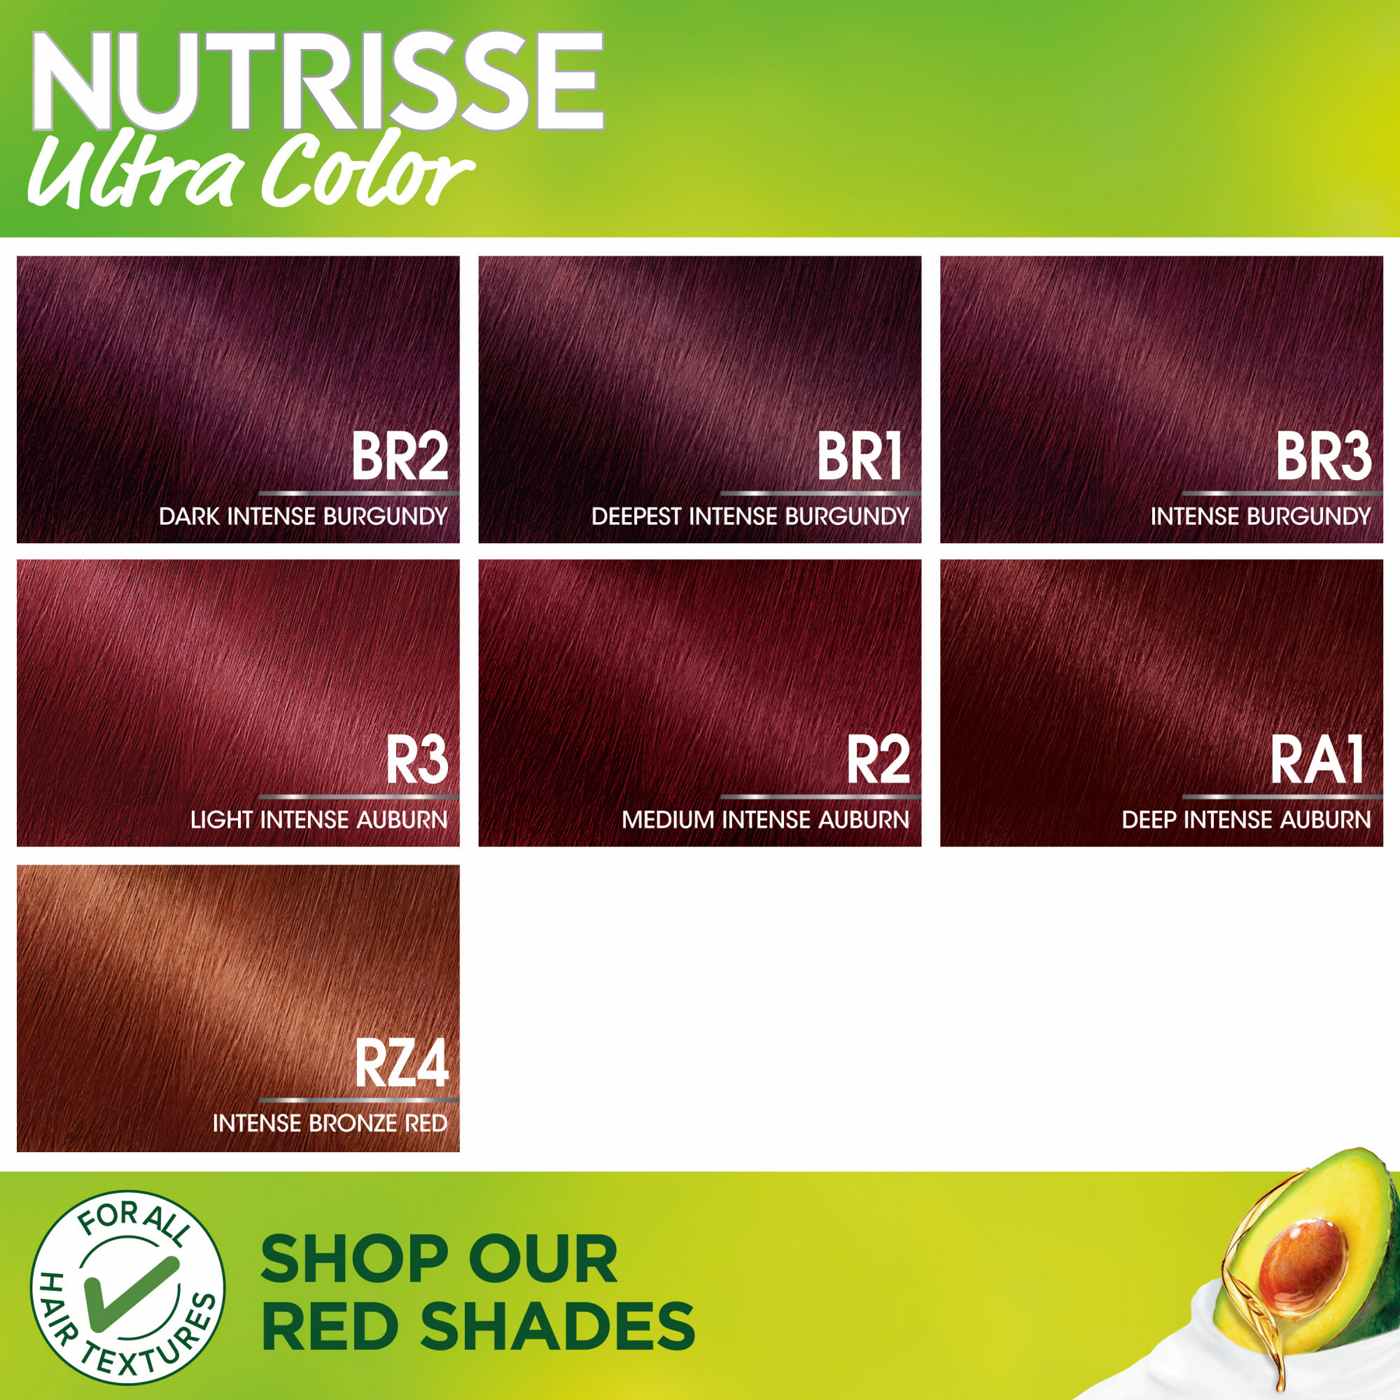 Garnier Nutrisse Ultra Color Nourishing Bold Permanent Hair Color Creme R2 Medium Intense Auburn; image 5 of 8